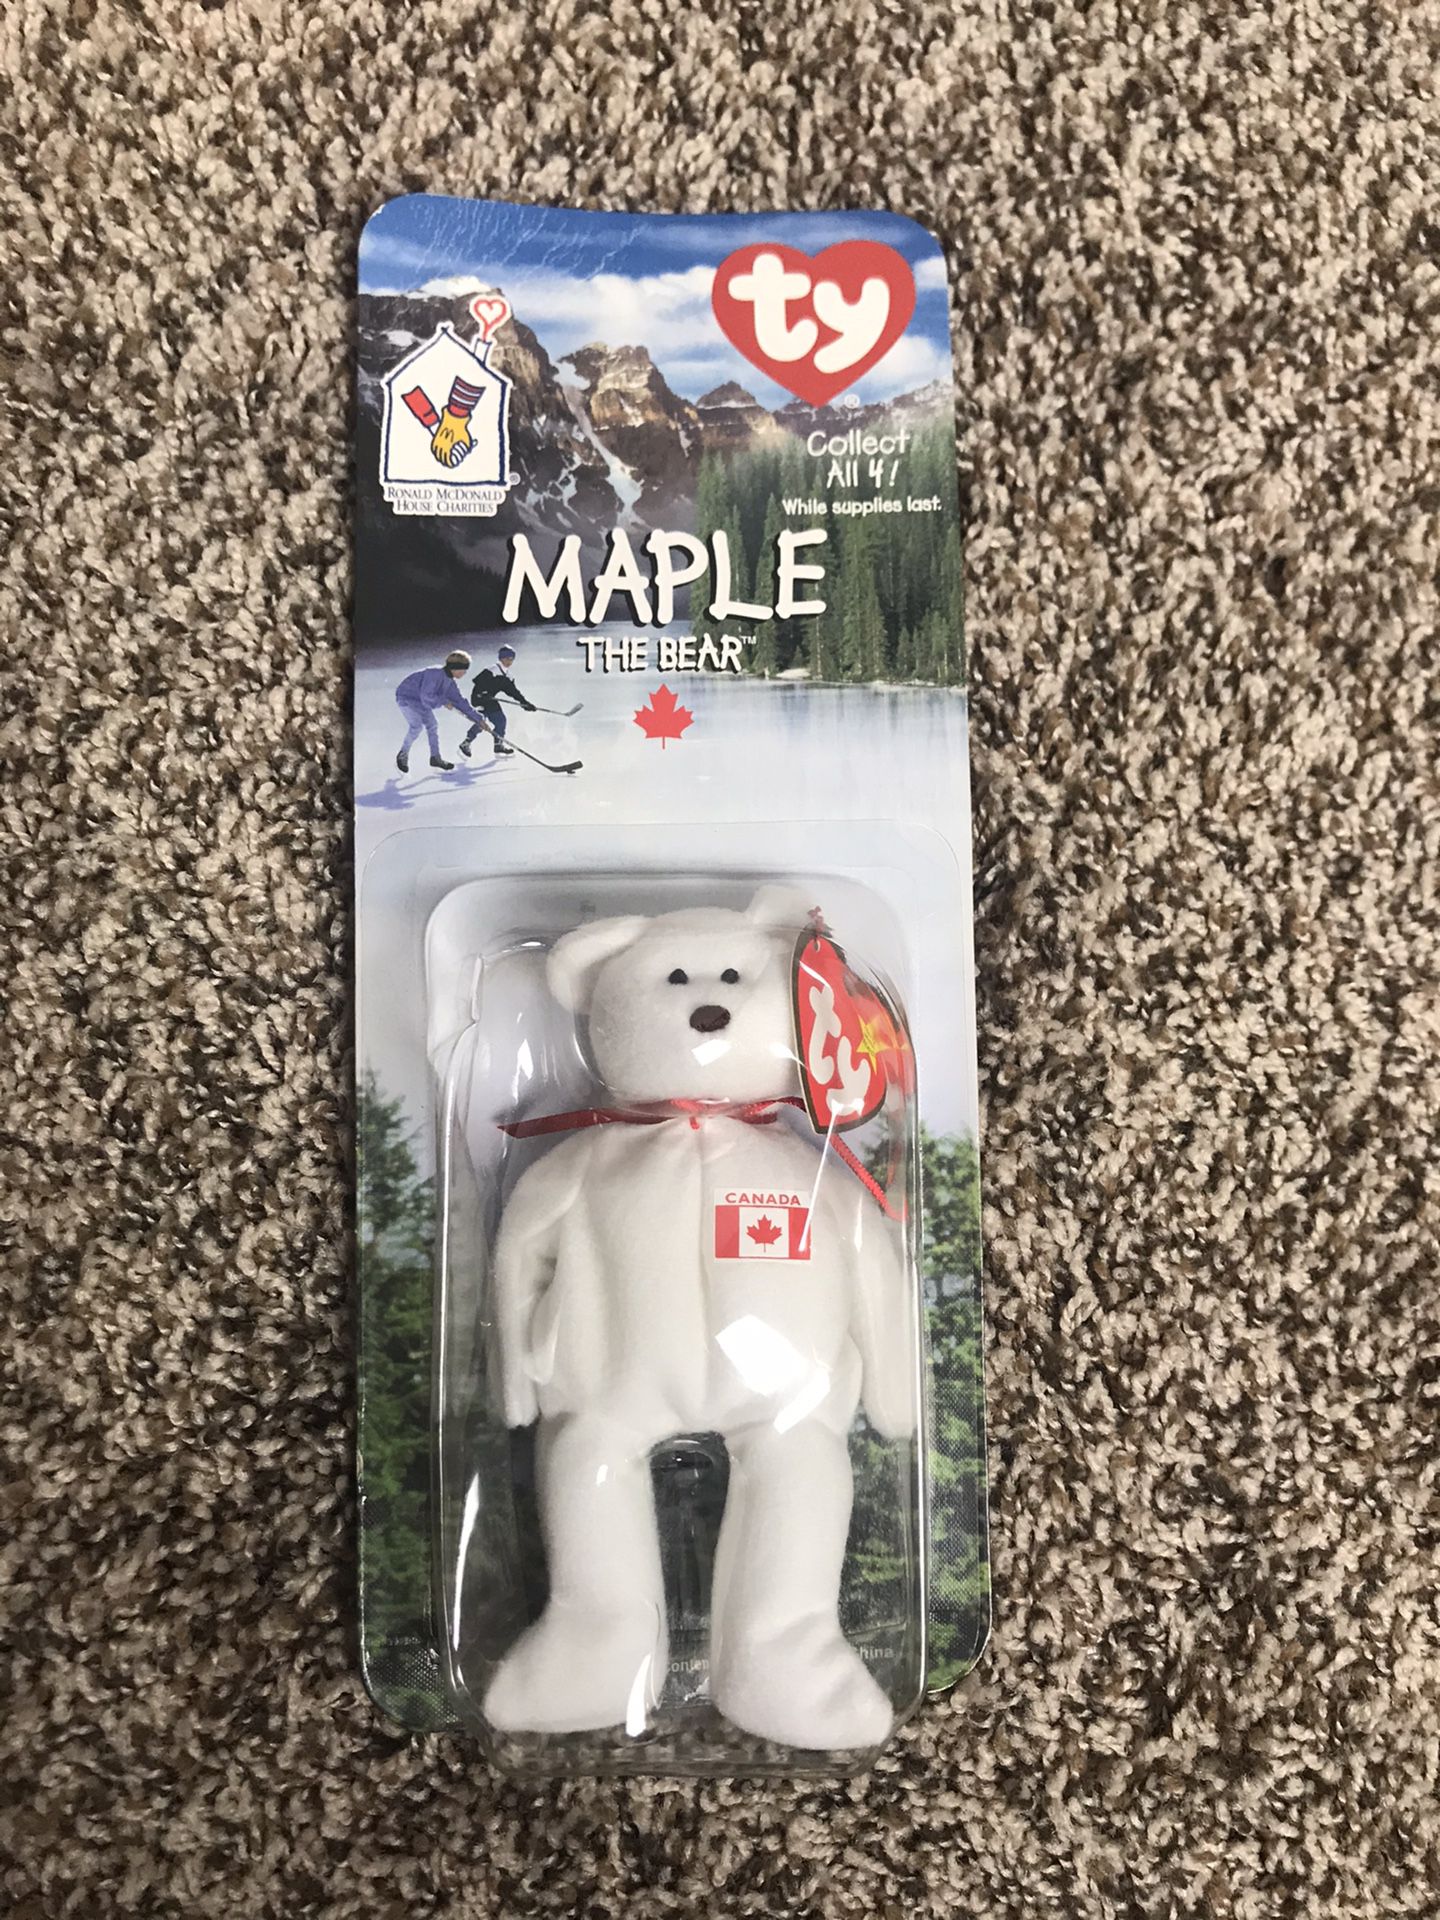 Ty Maple The Bear 1999 Canadian Canada Beanie Baby Ronald McDonald House NIB